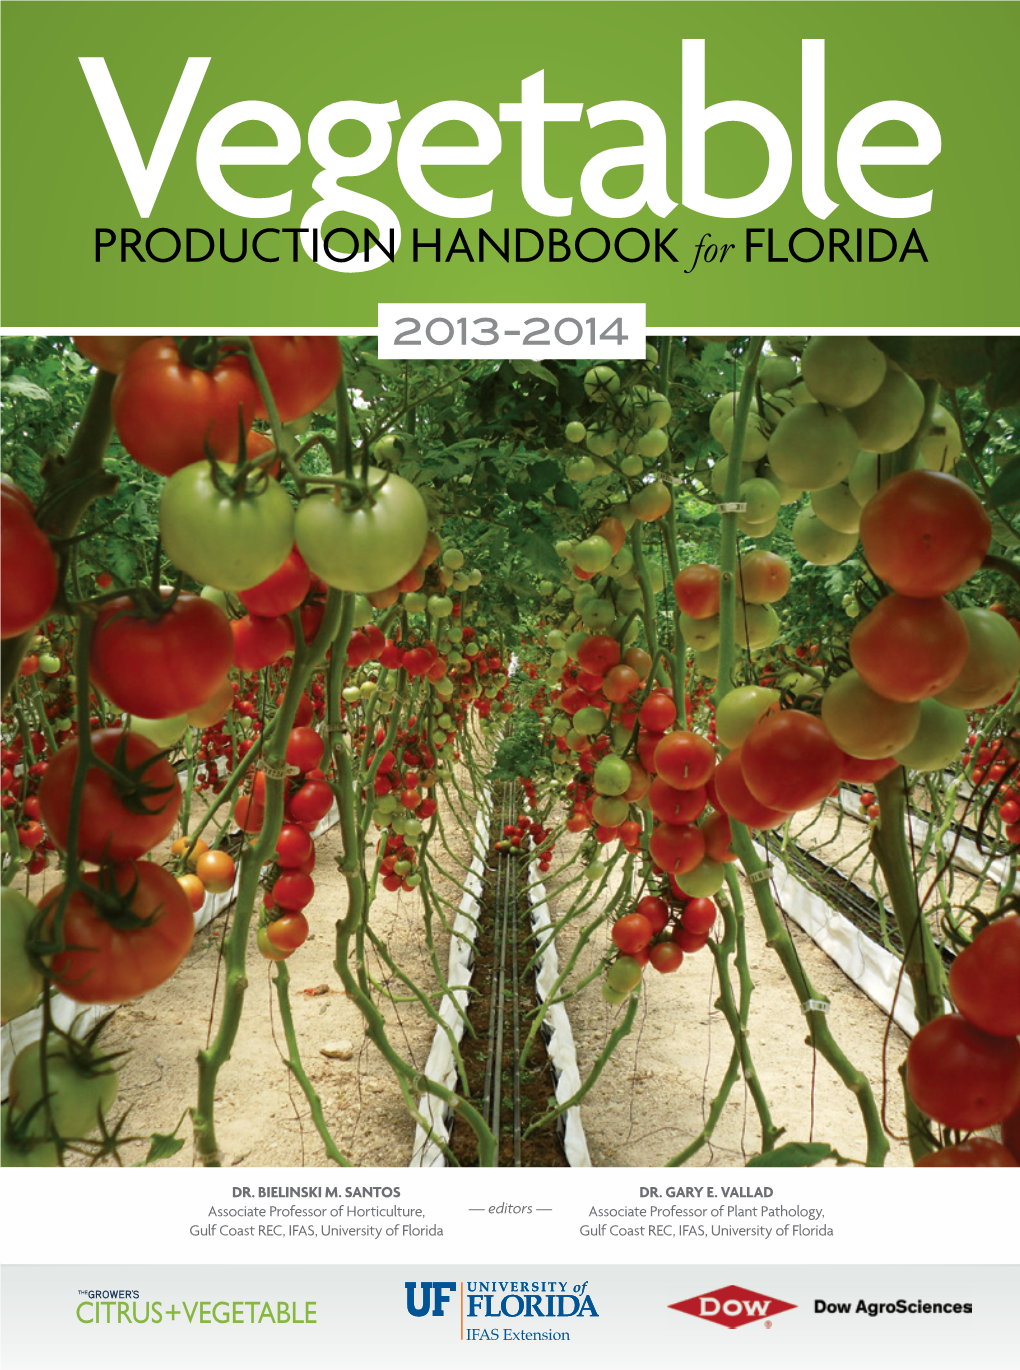 Vegetable Production Handbook Contents